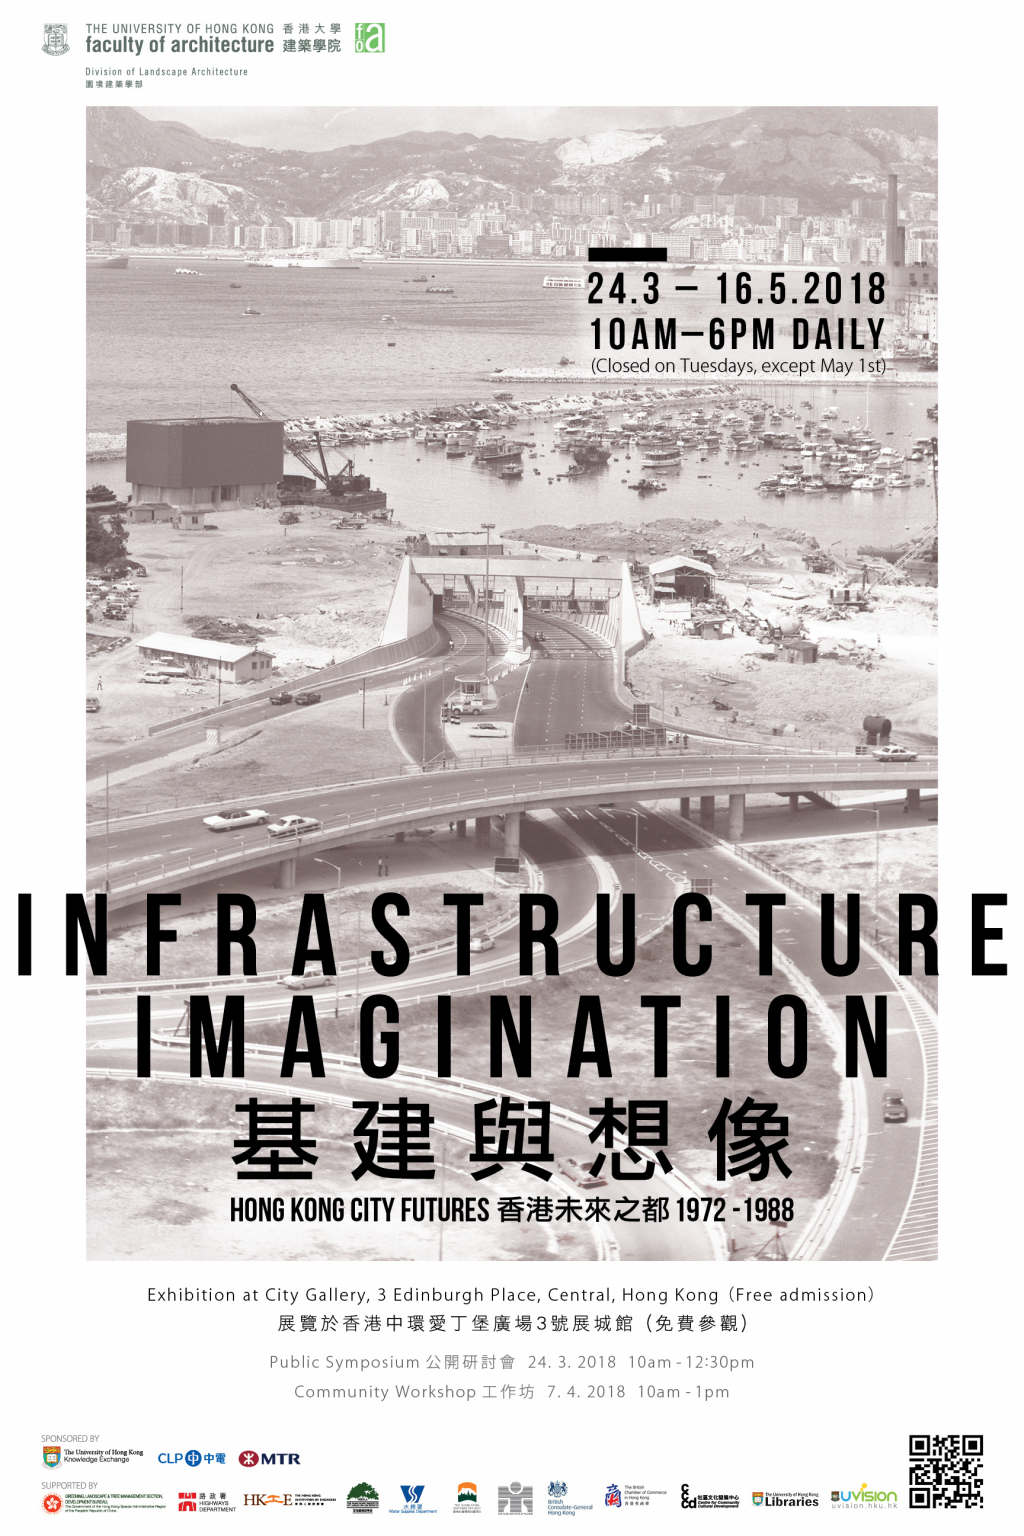 Infrastructure Imagination Exhibition